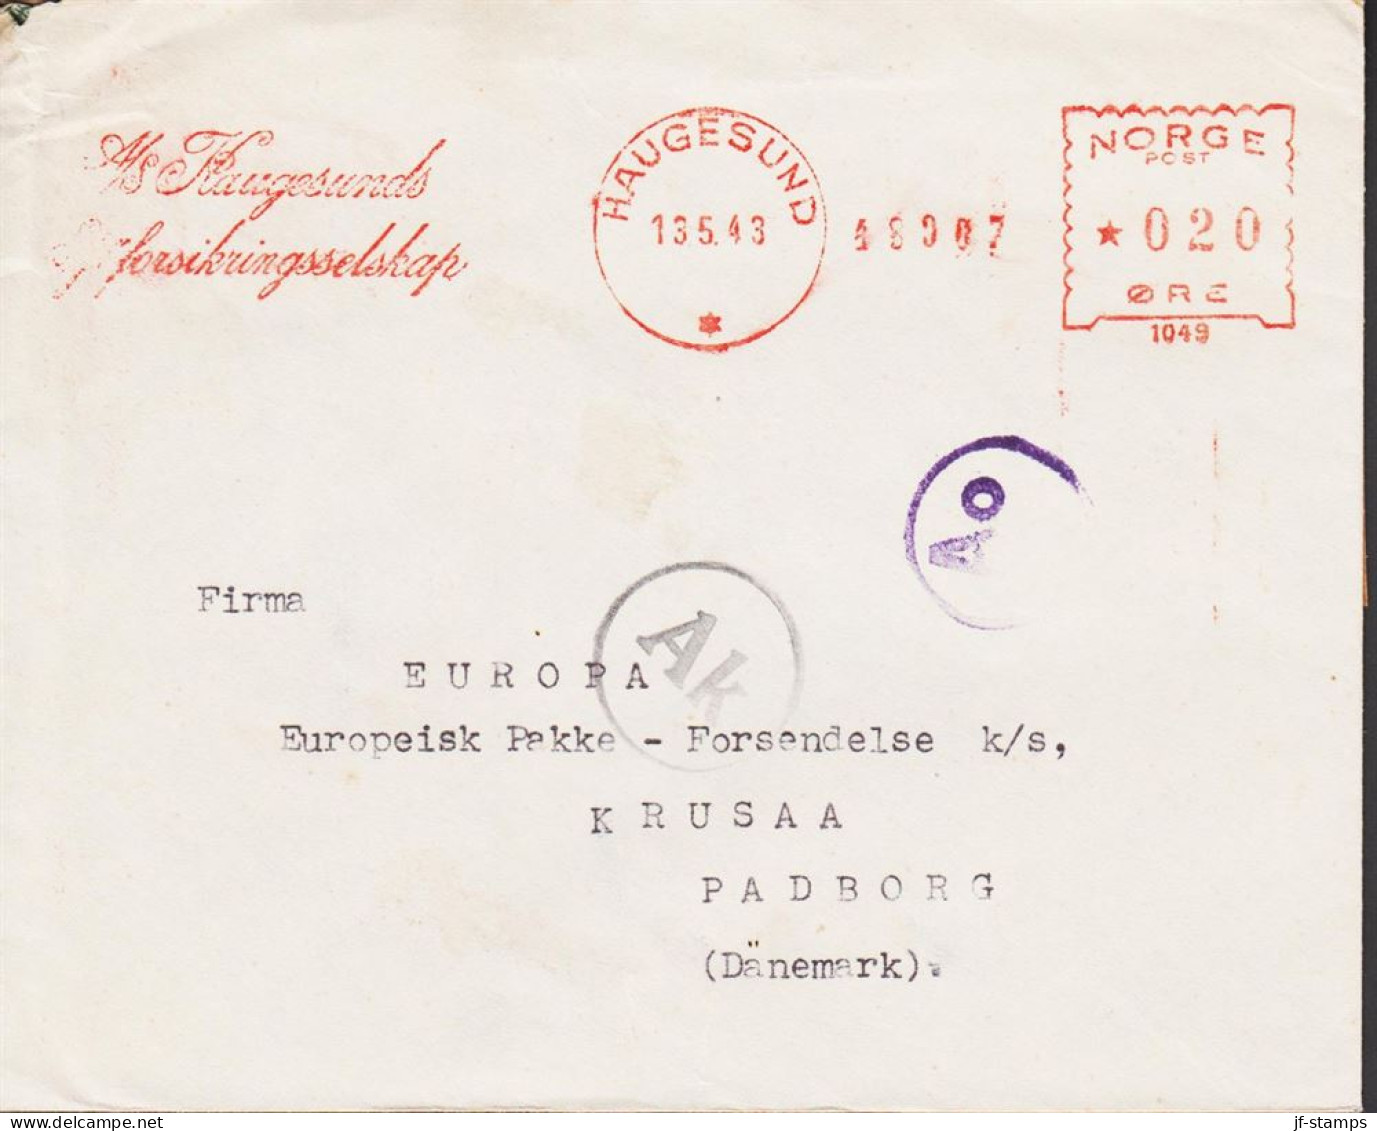 1943. NORGE. Very Interesting Cover To Firma EUROPA Europæisk Pakke Forsendelse, KRUSAA PADBORG DANMARK Ca... - JF545670 - Briefe U. Dokumente